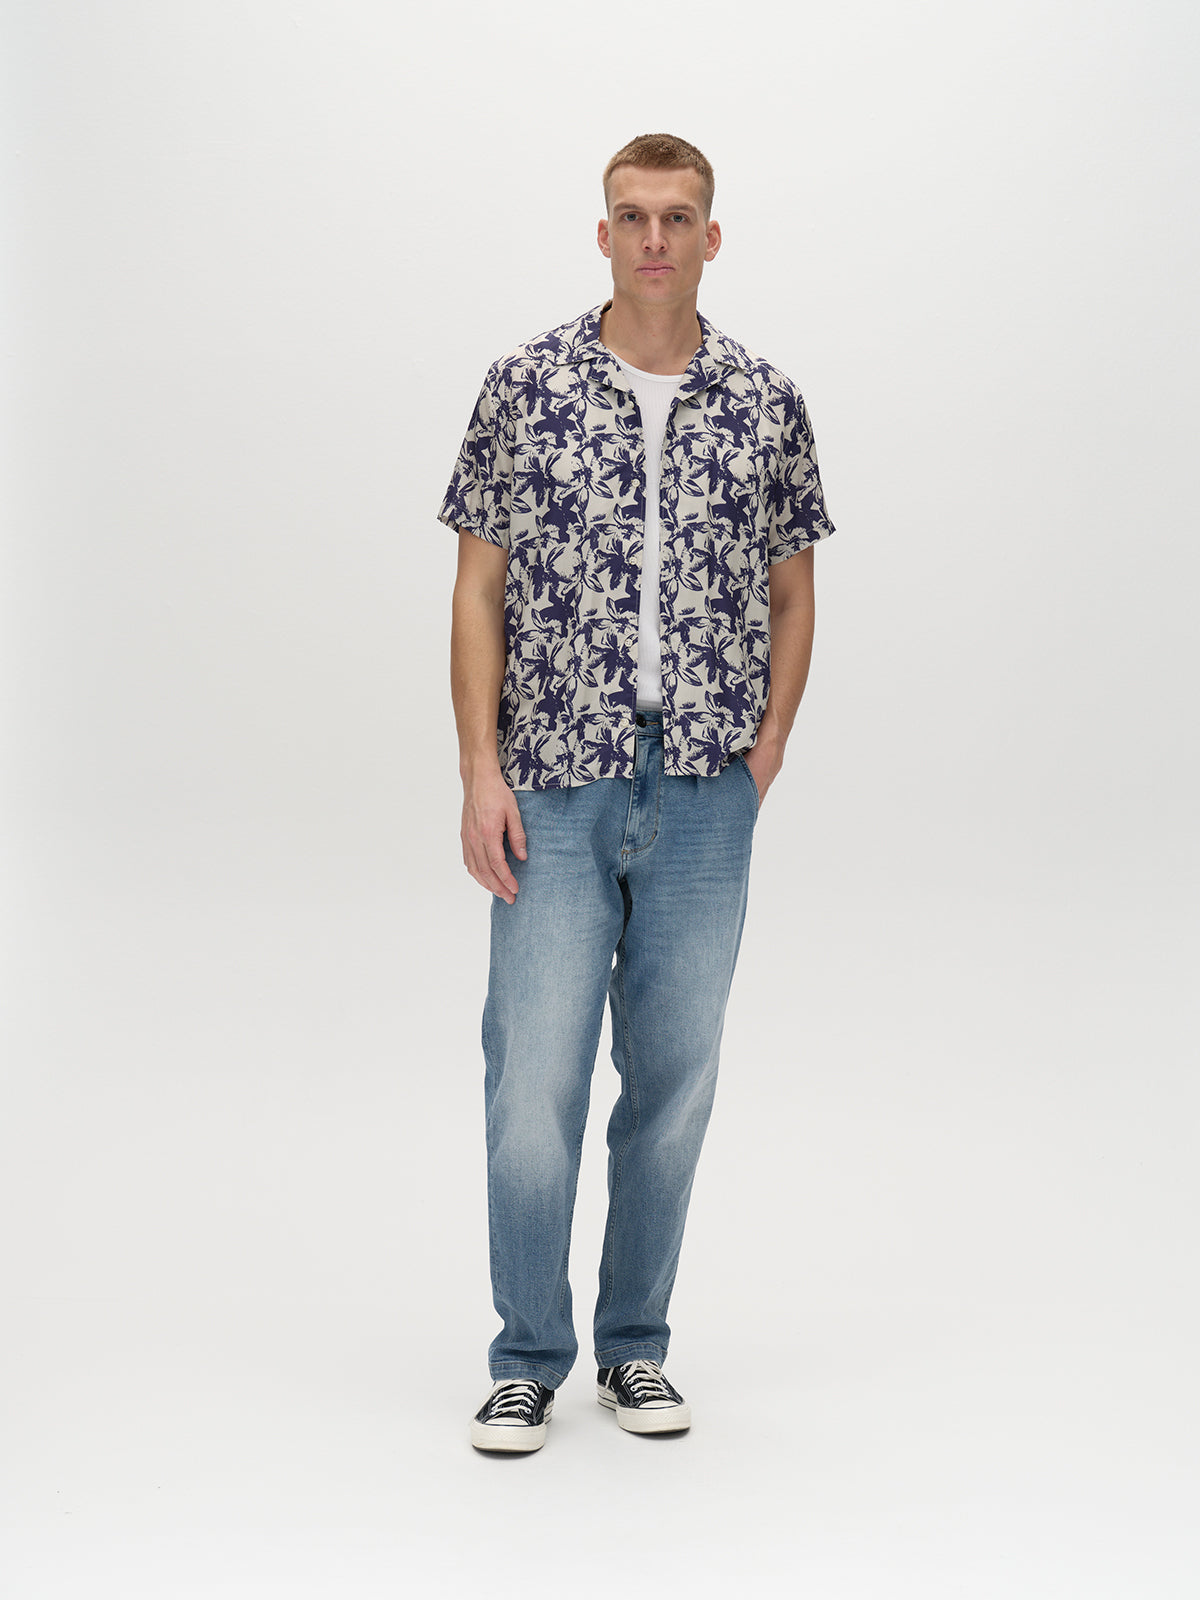 Gabba Tencel Pattern SS Shirt Black with Flowers-Men's Shirts-Brooklyn-Vancouver-Yaletown-Canada